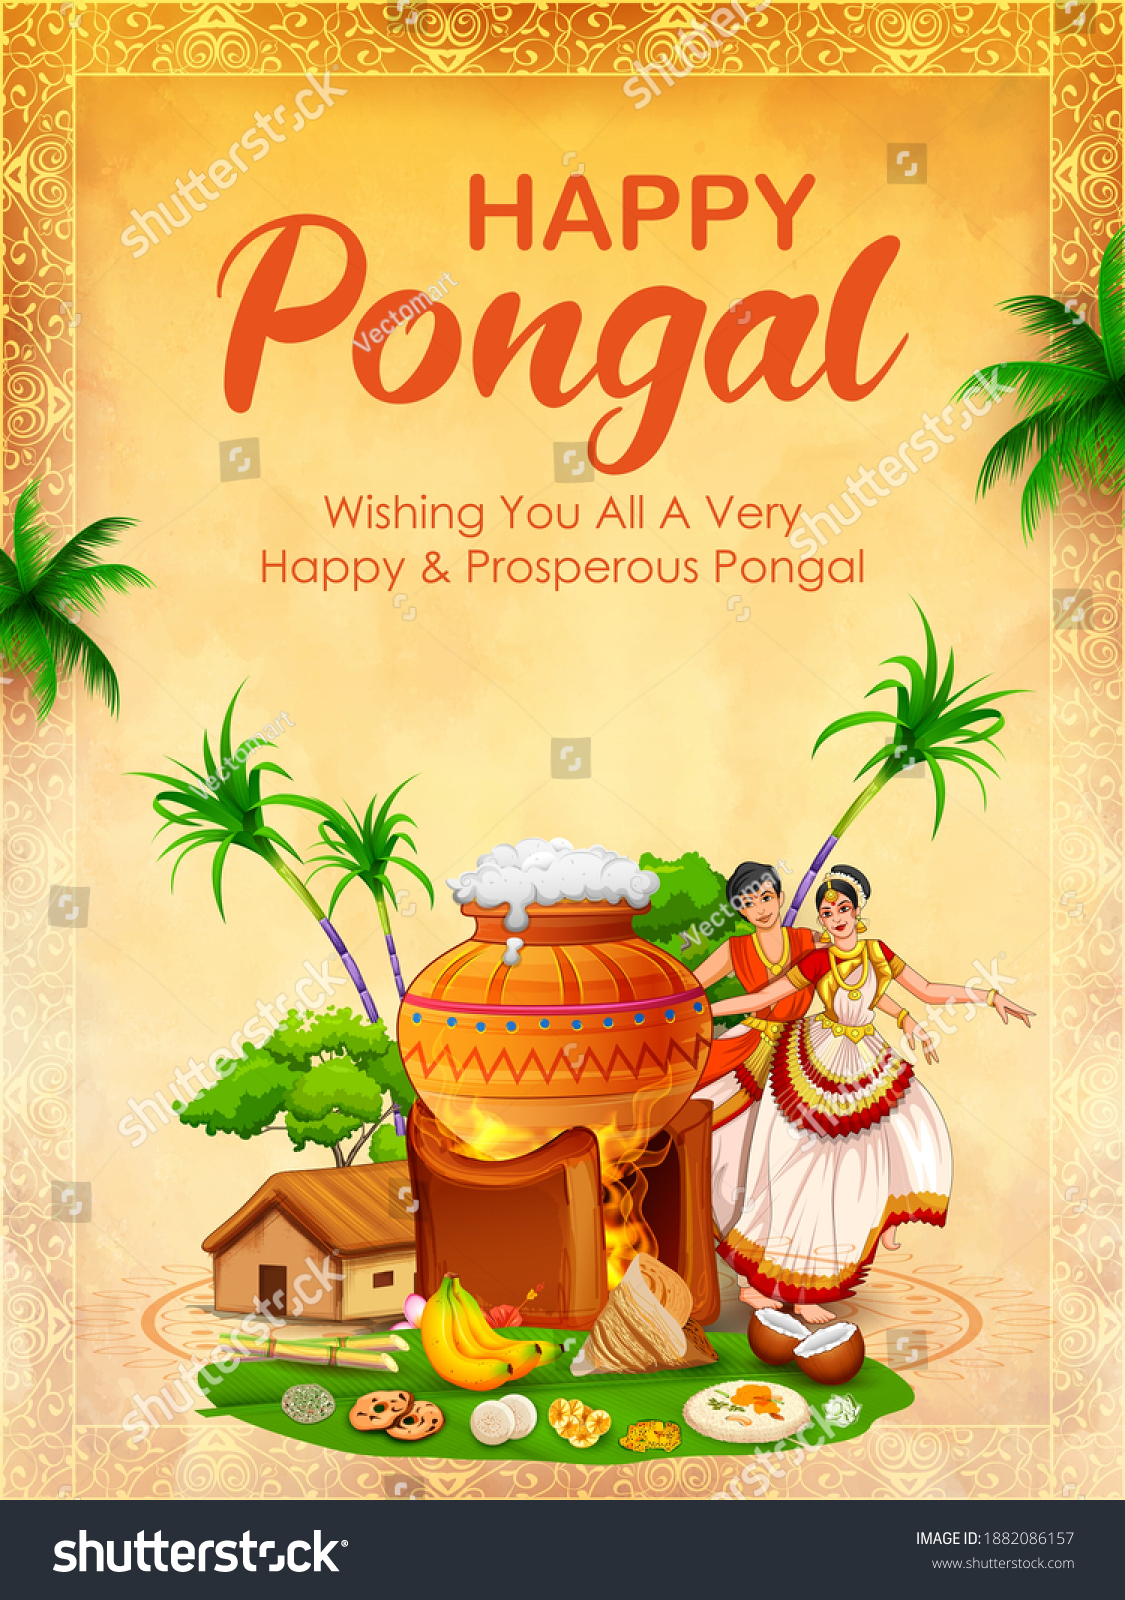 Pongal images stock photos vectors